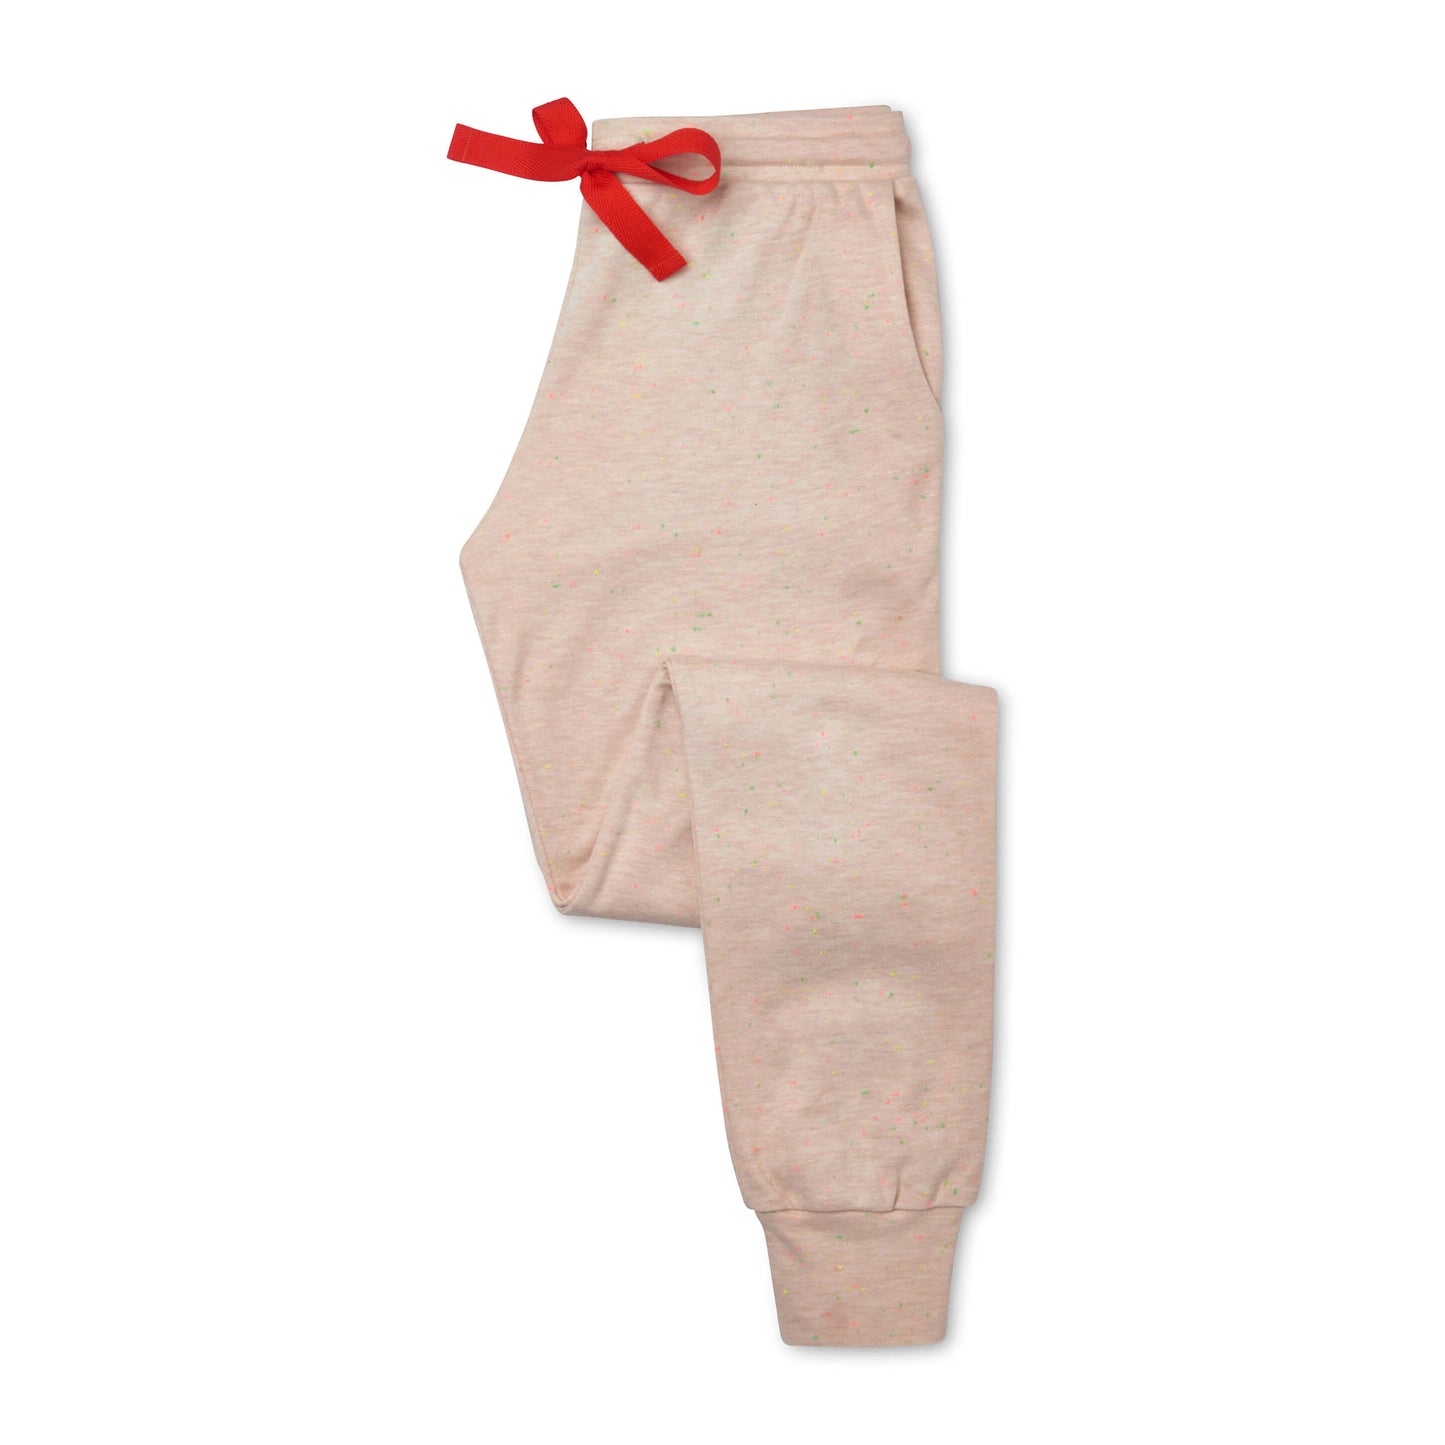 Tessie Confetti Oat Pyjama Trousers | Women's Pyjama Trousers | Ladies PJ Bottoms | Nep Fabric | Beige Pyjama Trousers with Pockets | Cuffed Pyjama Bottoms